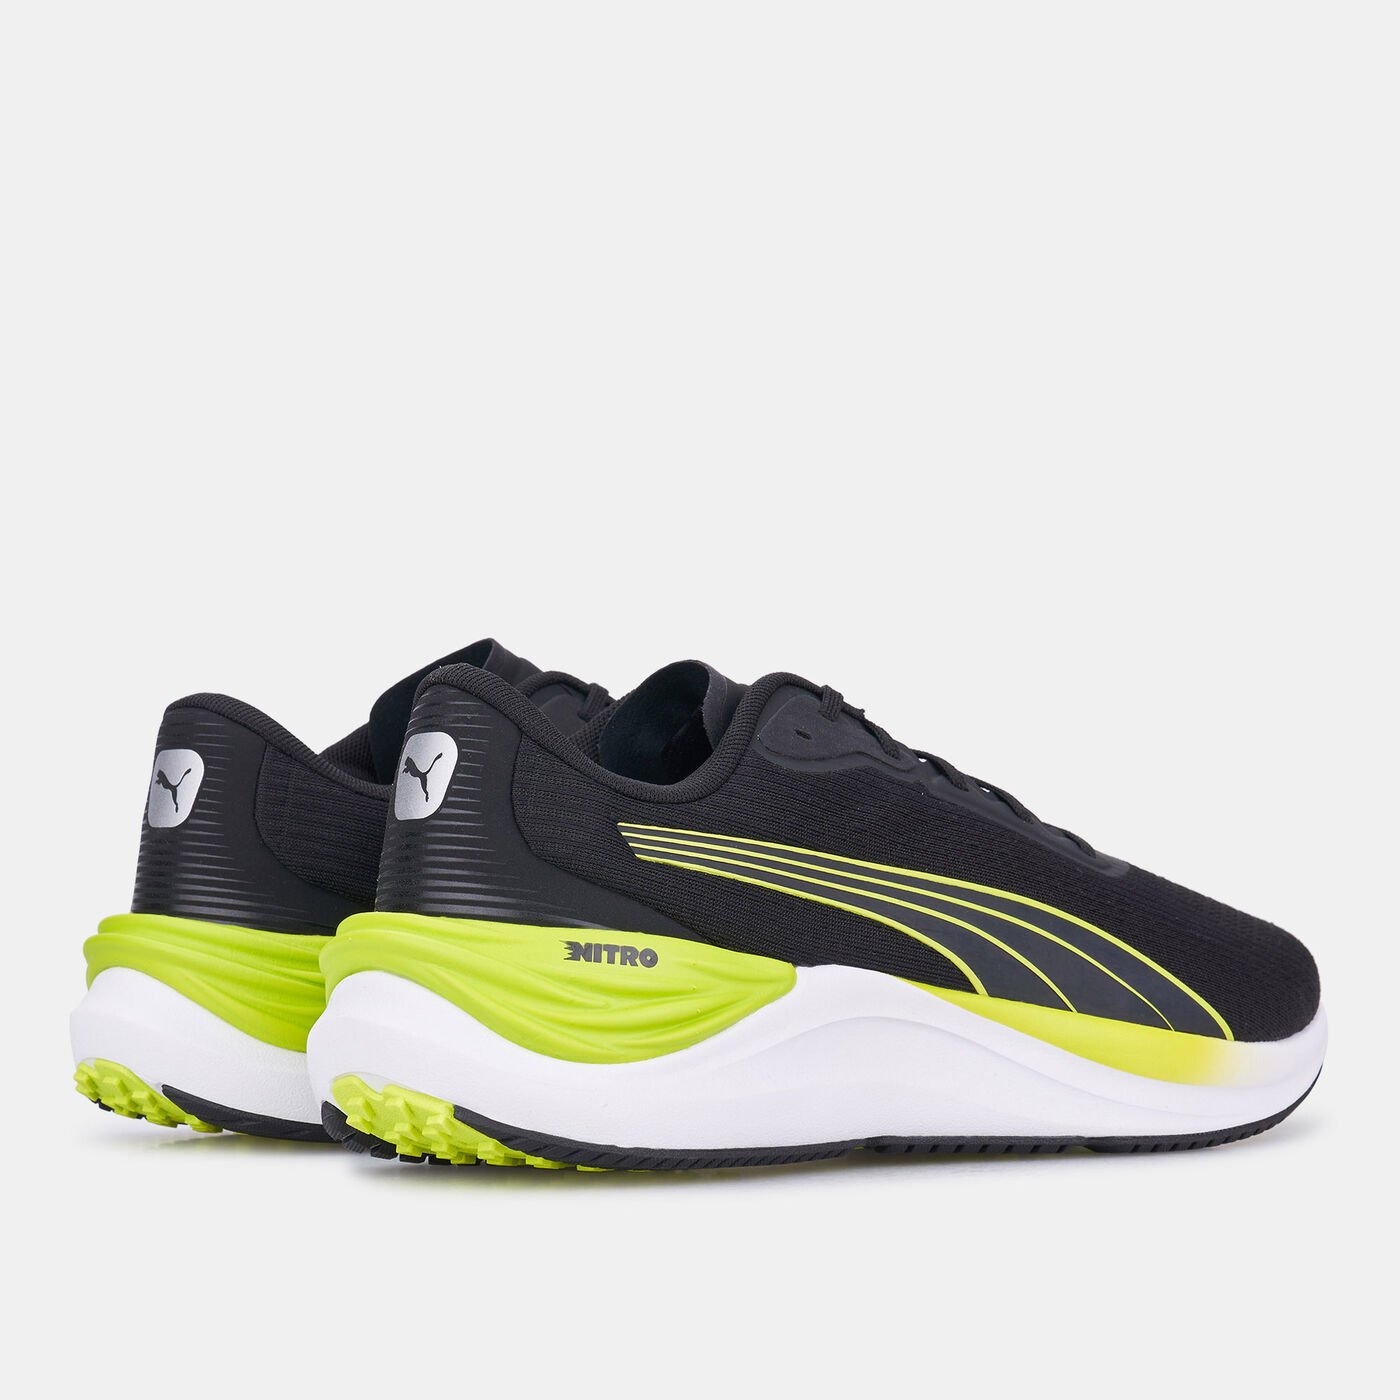 Men's Electrify NITRO 3 Running Shoes